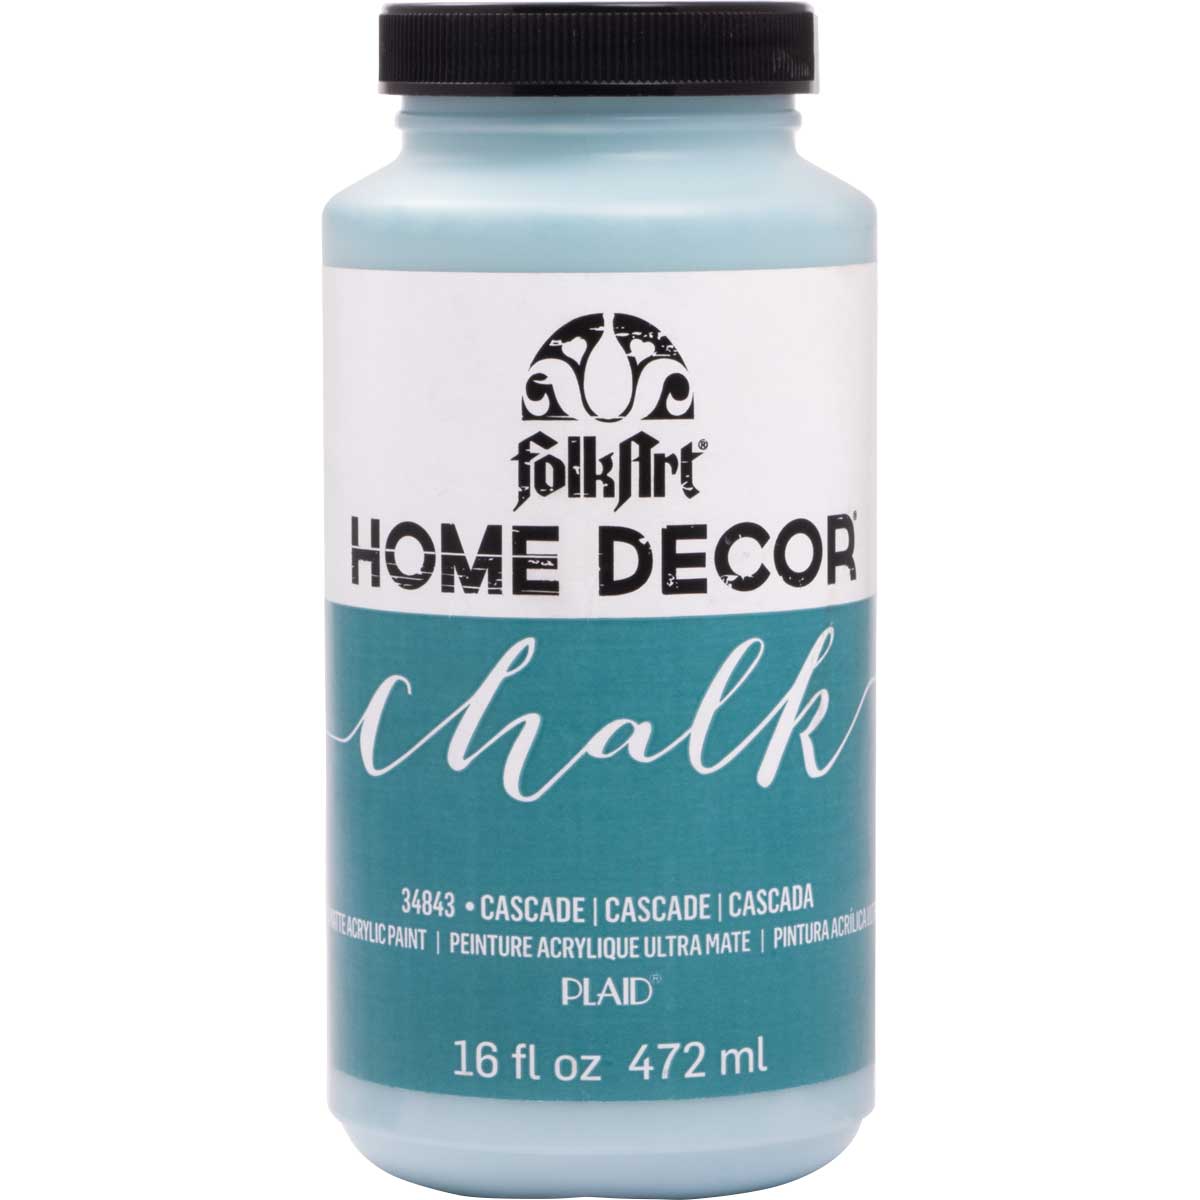 FolkArt ® Home Decor™ Chalk - Cascade, 16 oz. - 34843